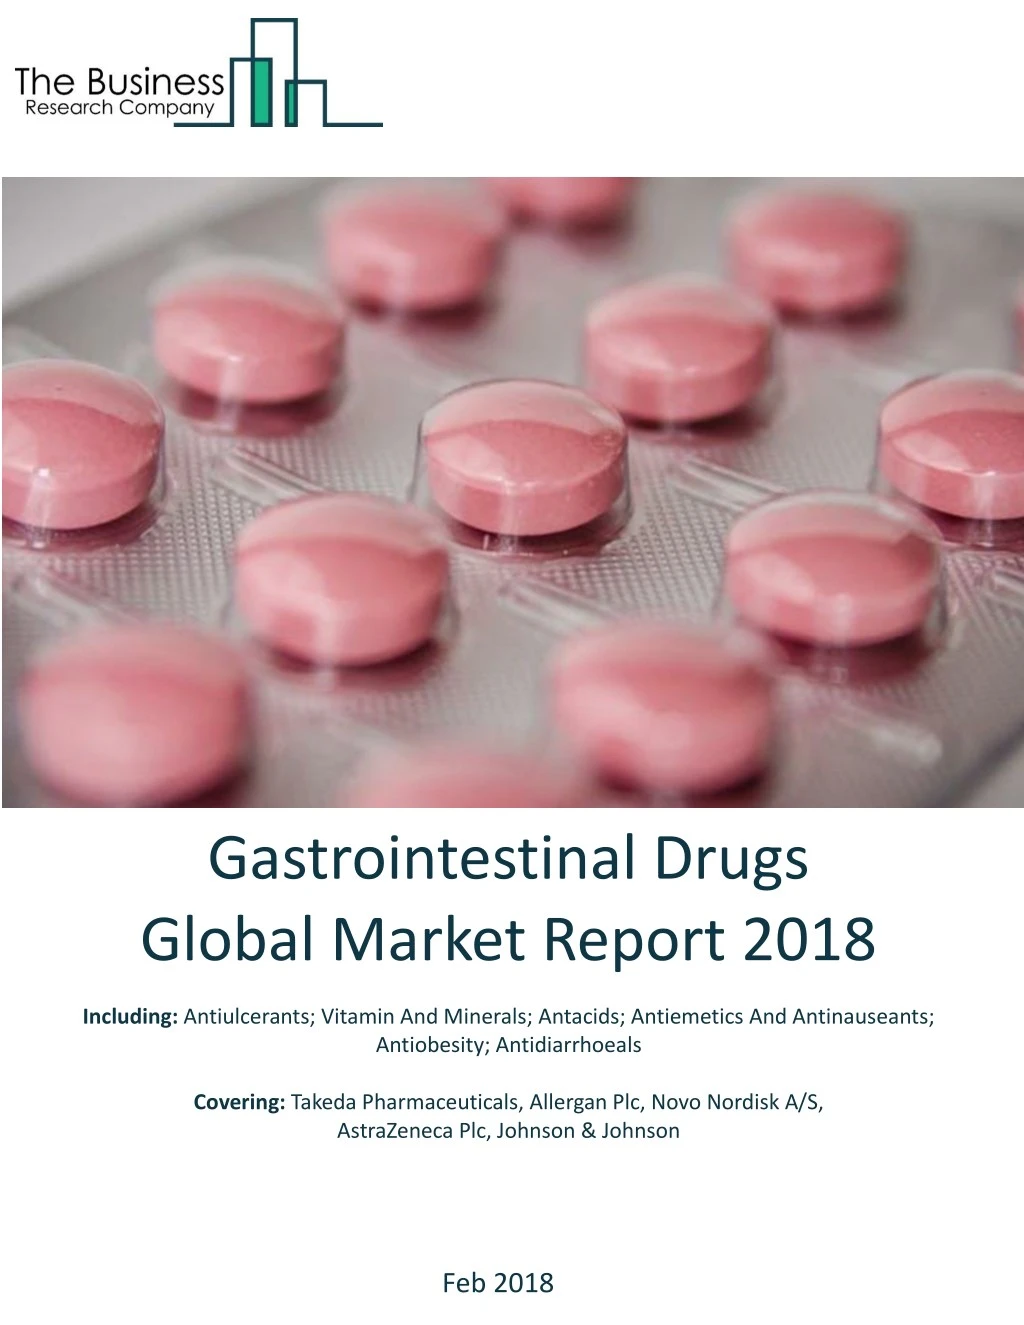 gastrointestinal drugs global market report 2018